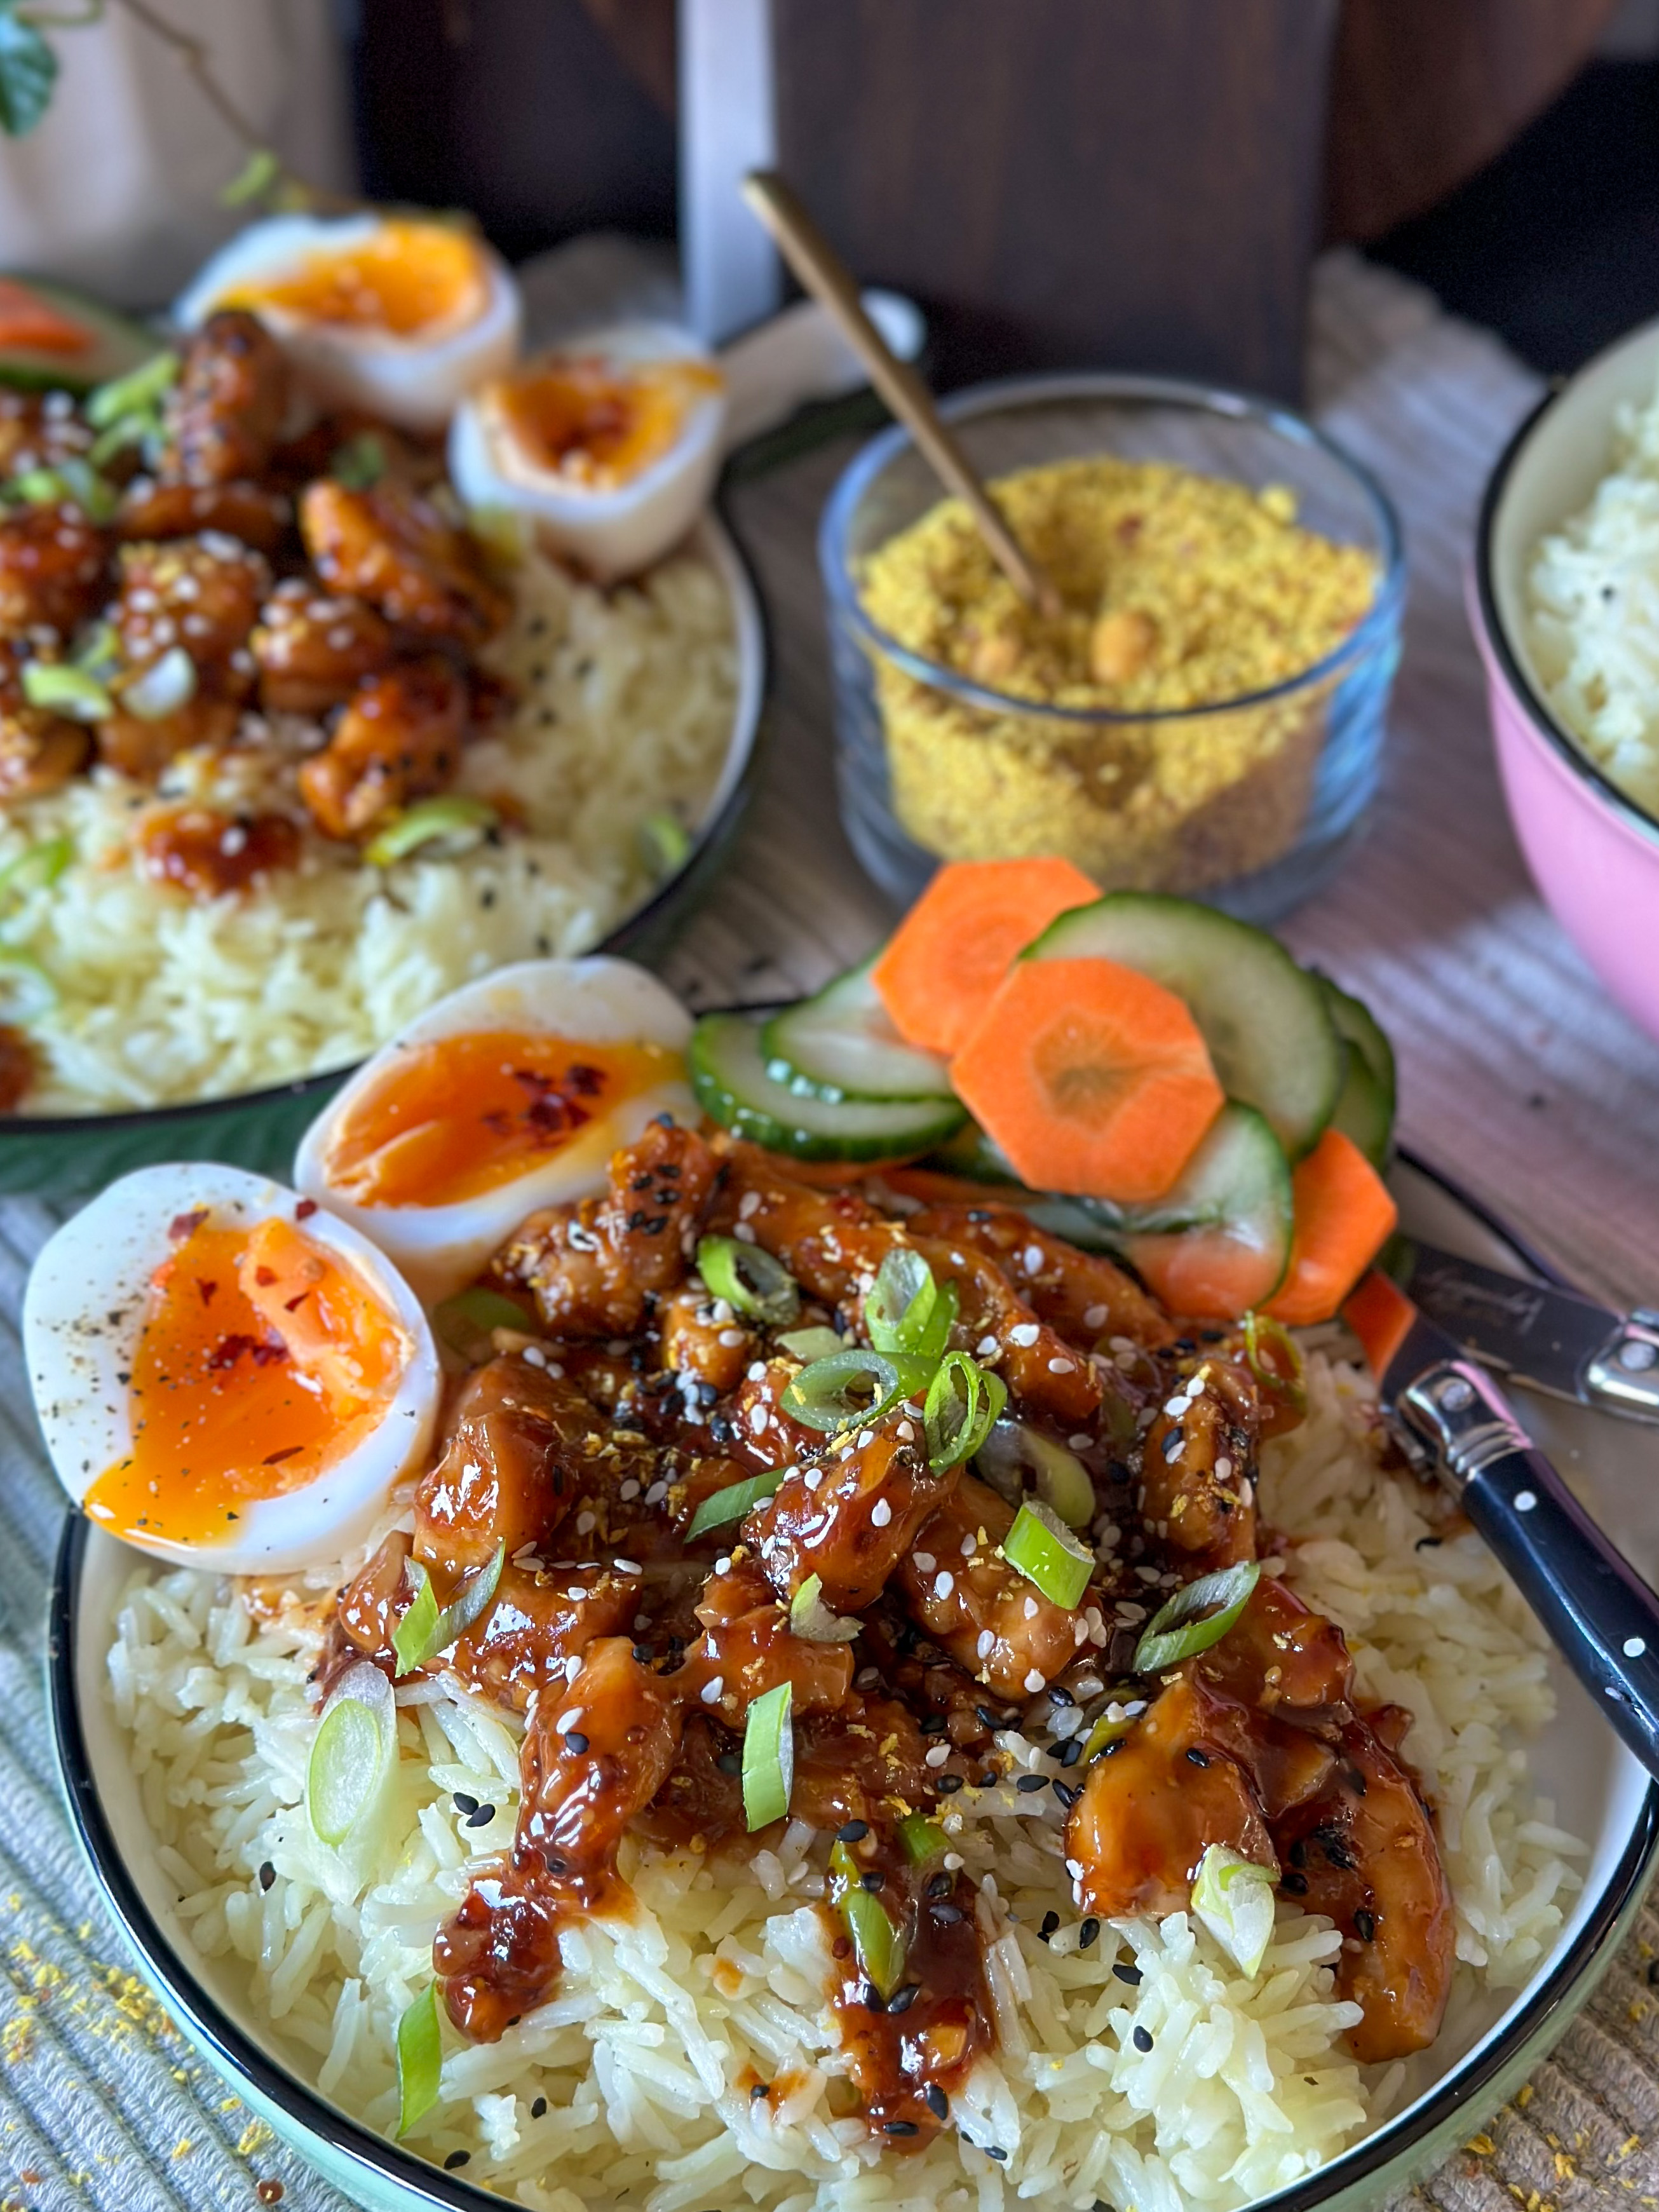 Thaise kip met kruidige rijst